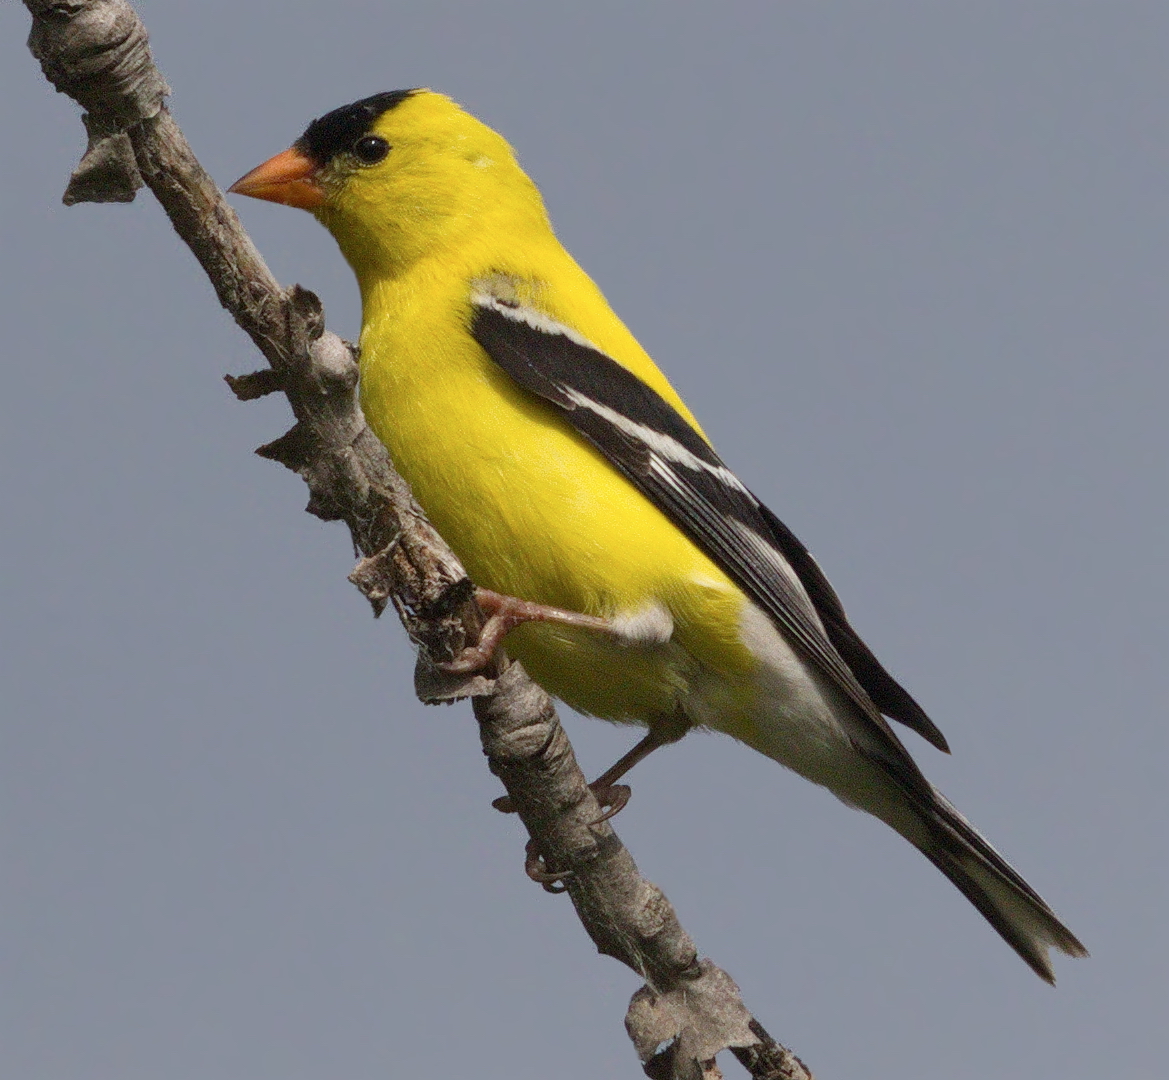 Птички с желтыми полосками. Птица с желтыми полосками на крыльях. Желтые птицы в Саратове. Птица с желтой спинкой. Птица с желтыми бочками.